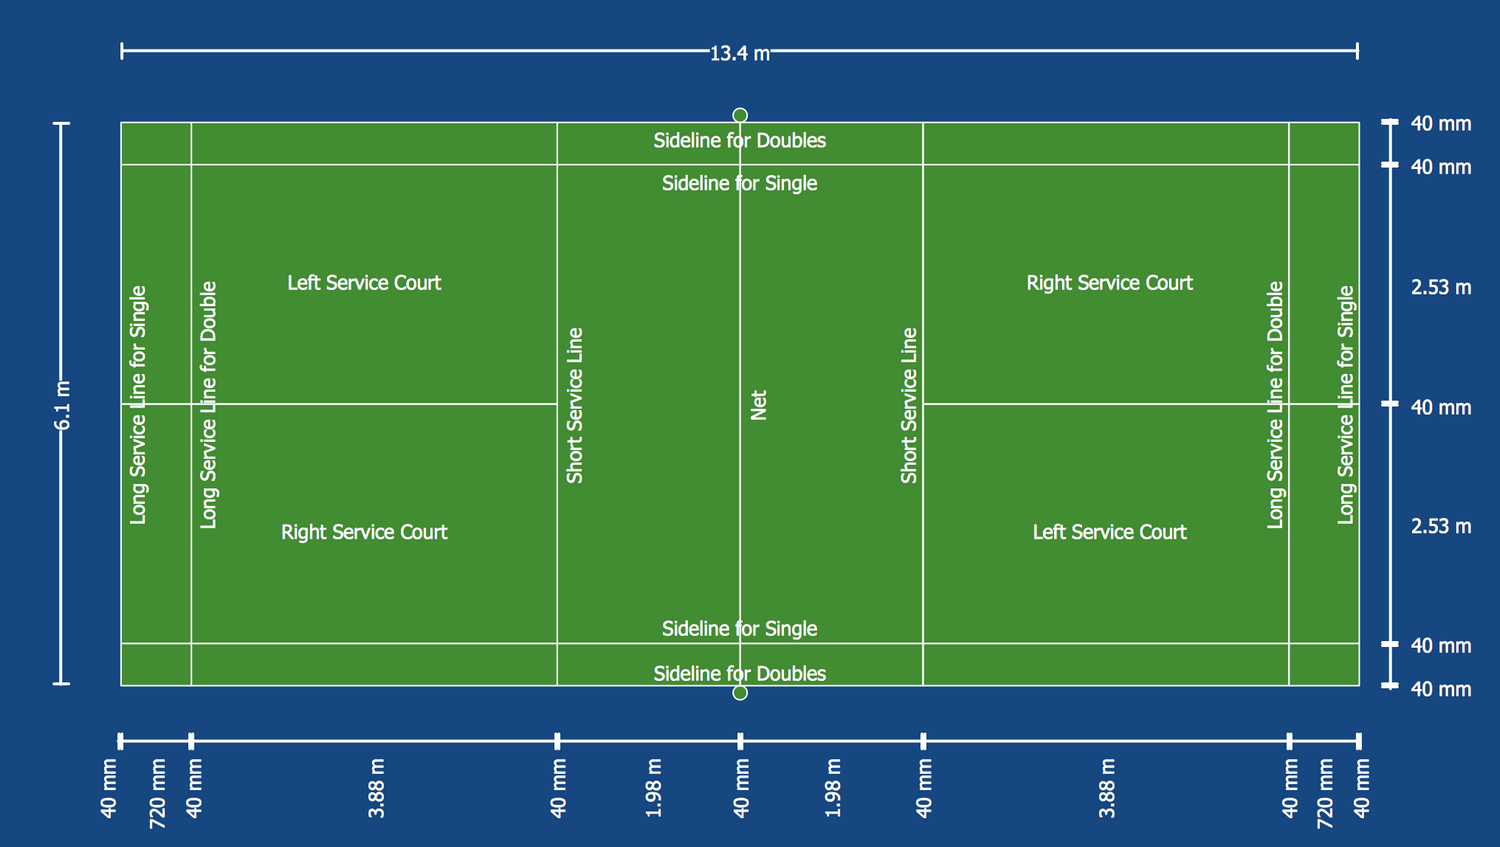 Labelled Diagram Of Badminton Court